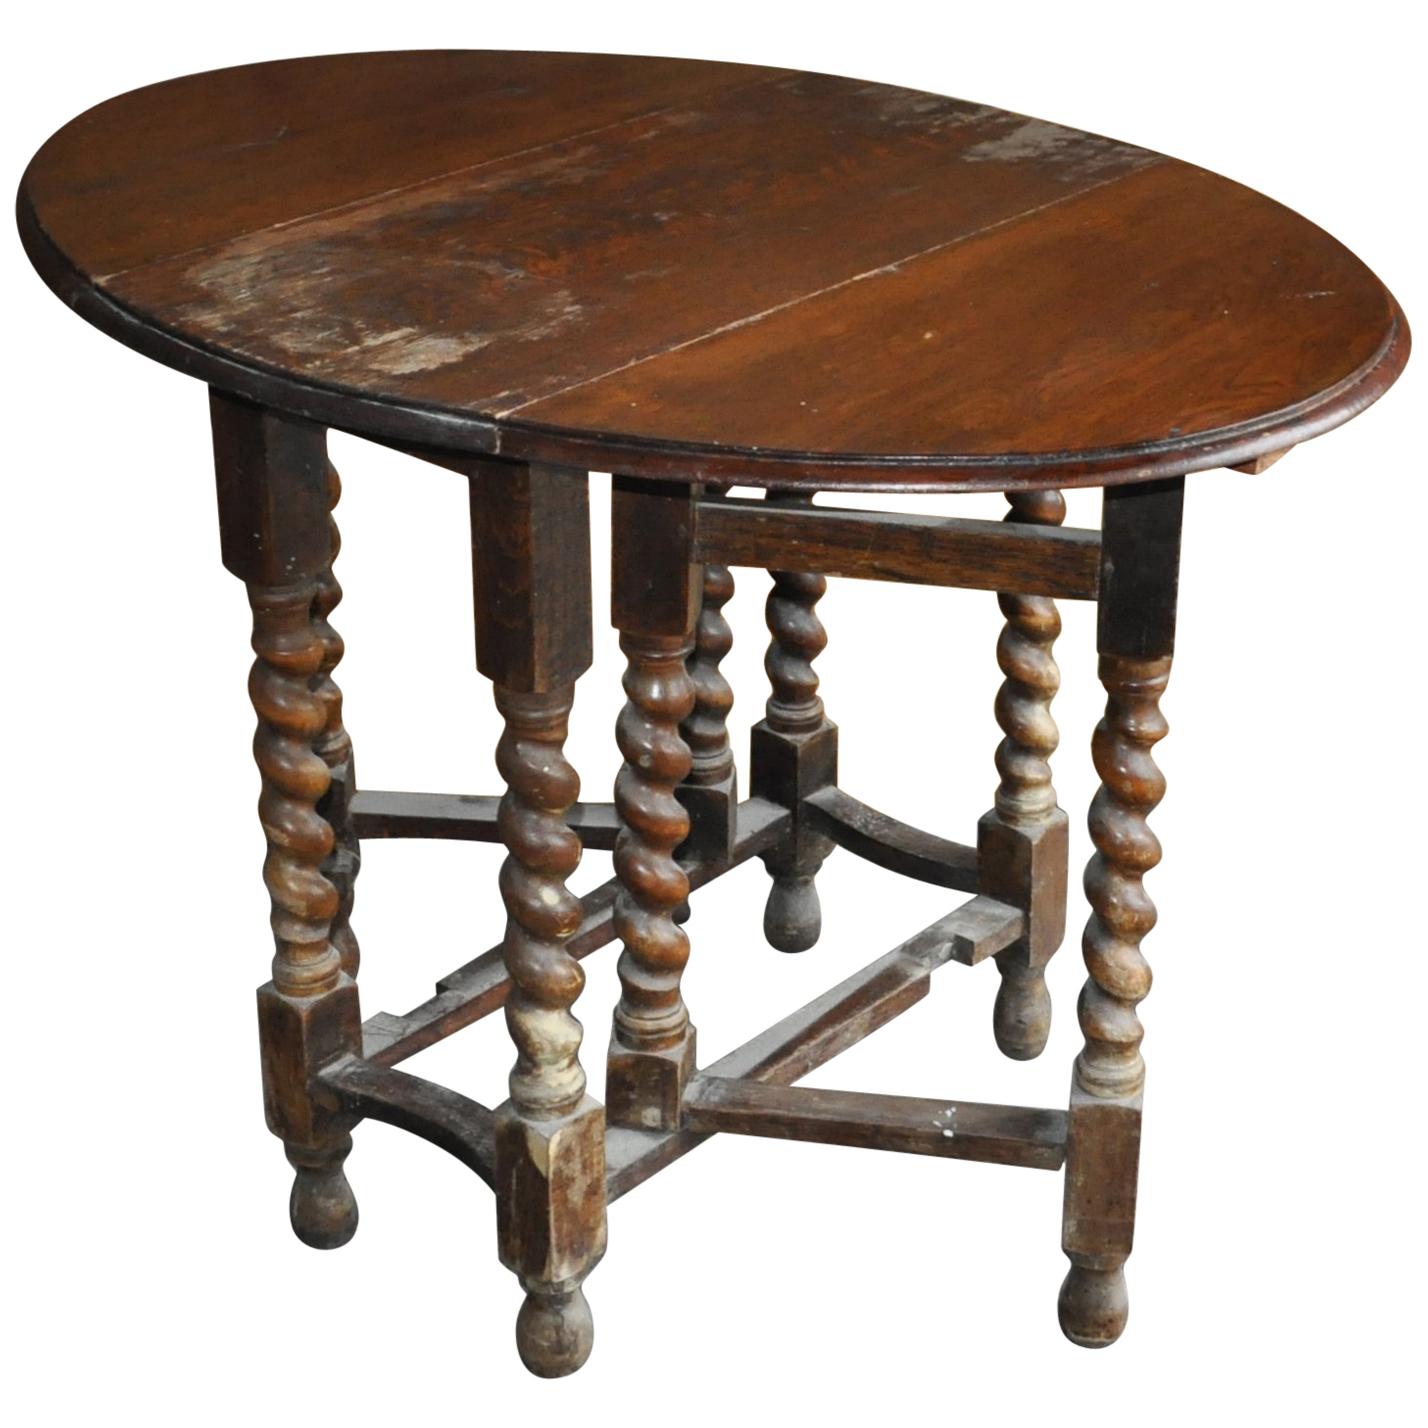 Antique English Oak Drop Leaf Dining Table, Rustic Gate Leg Table, 19th Century